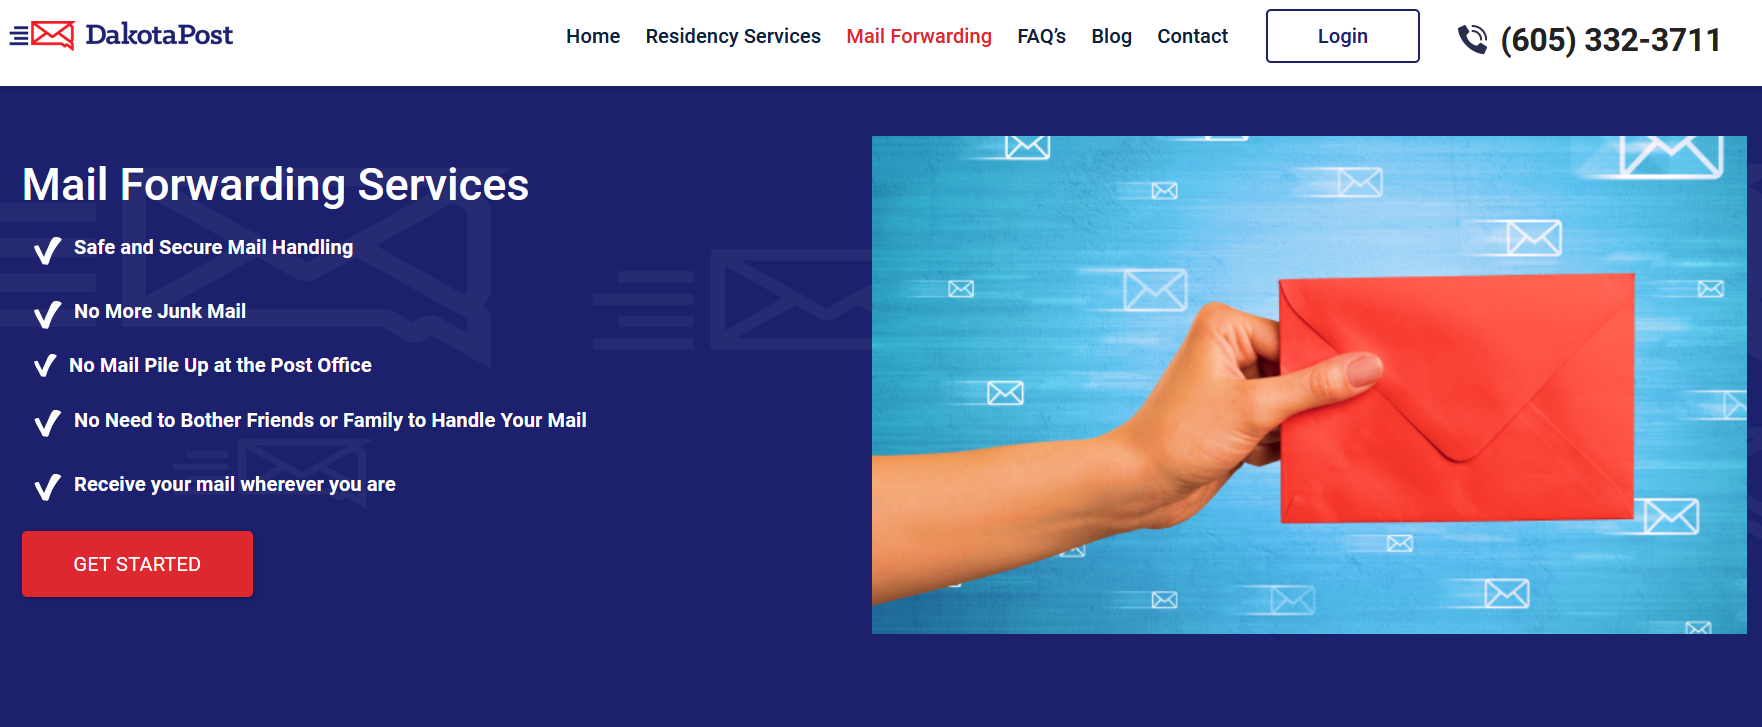 Dakota Post mail forwarding service